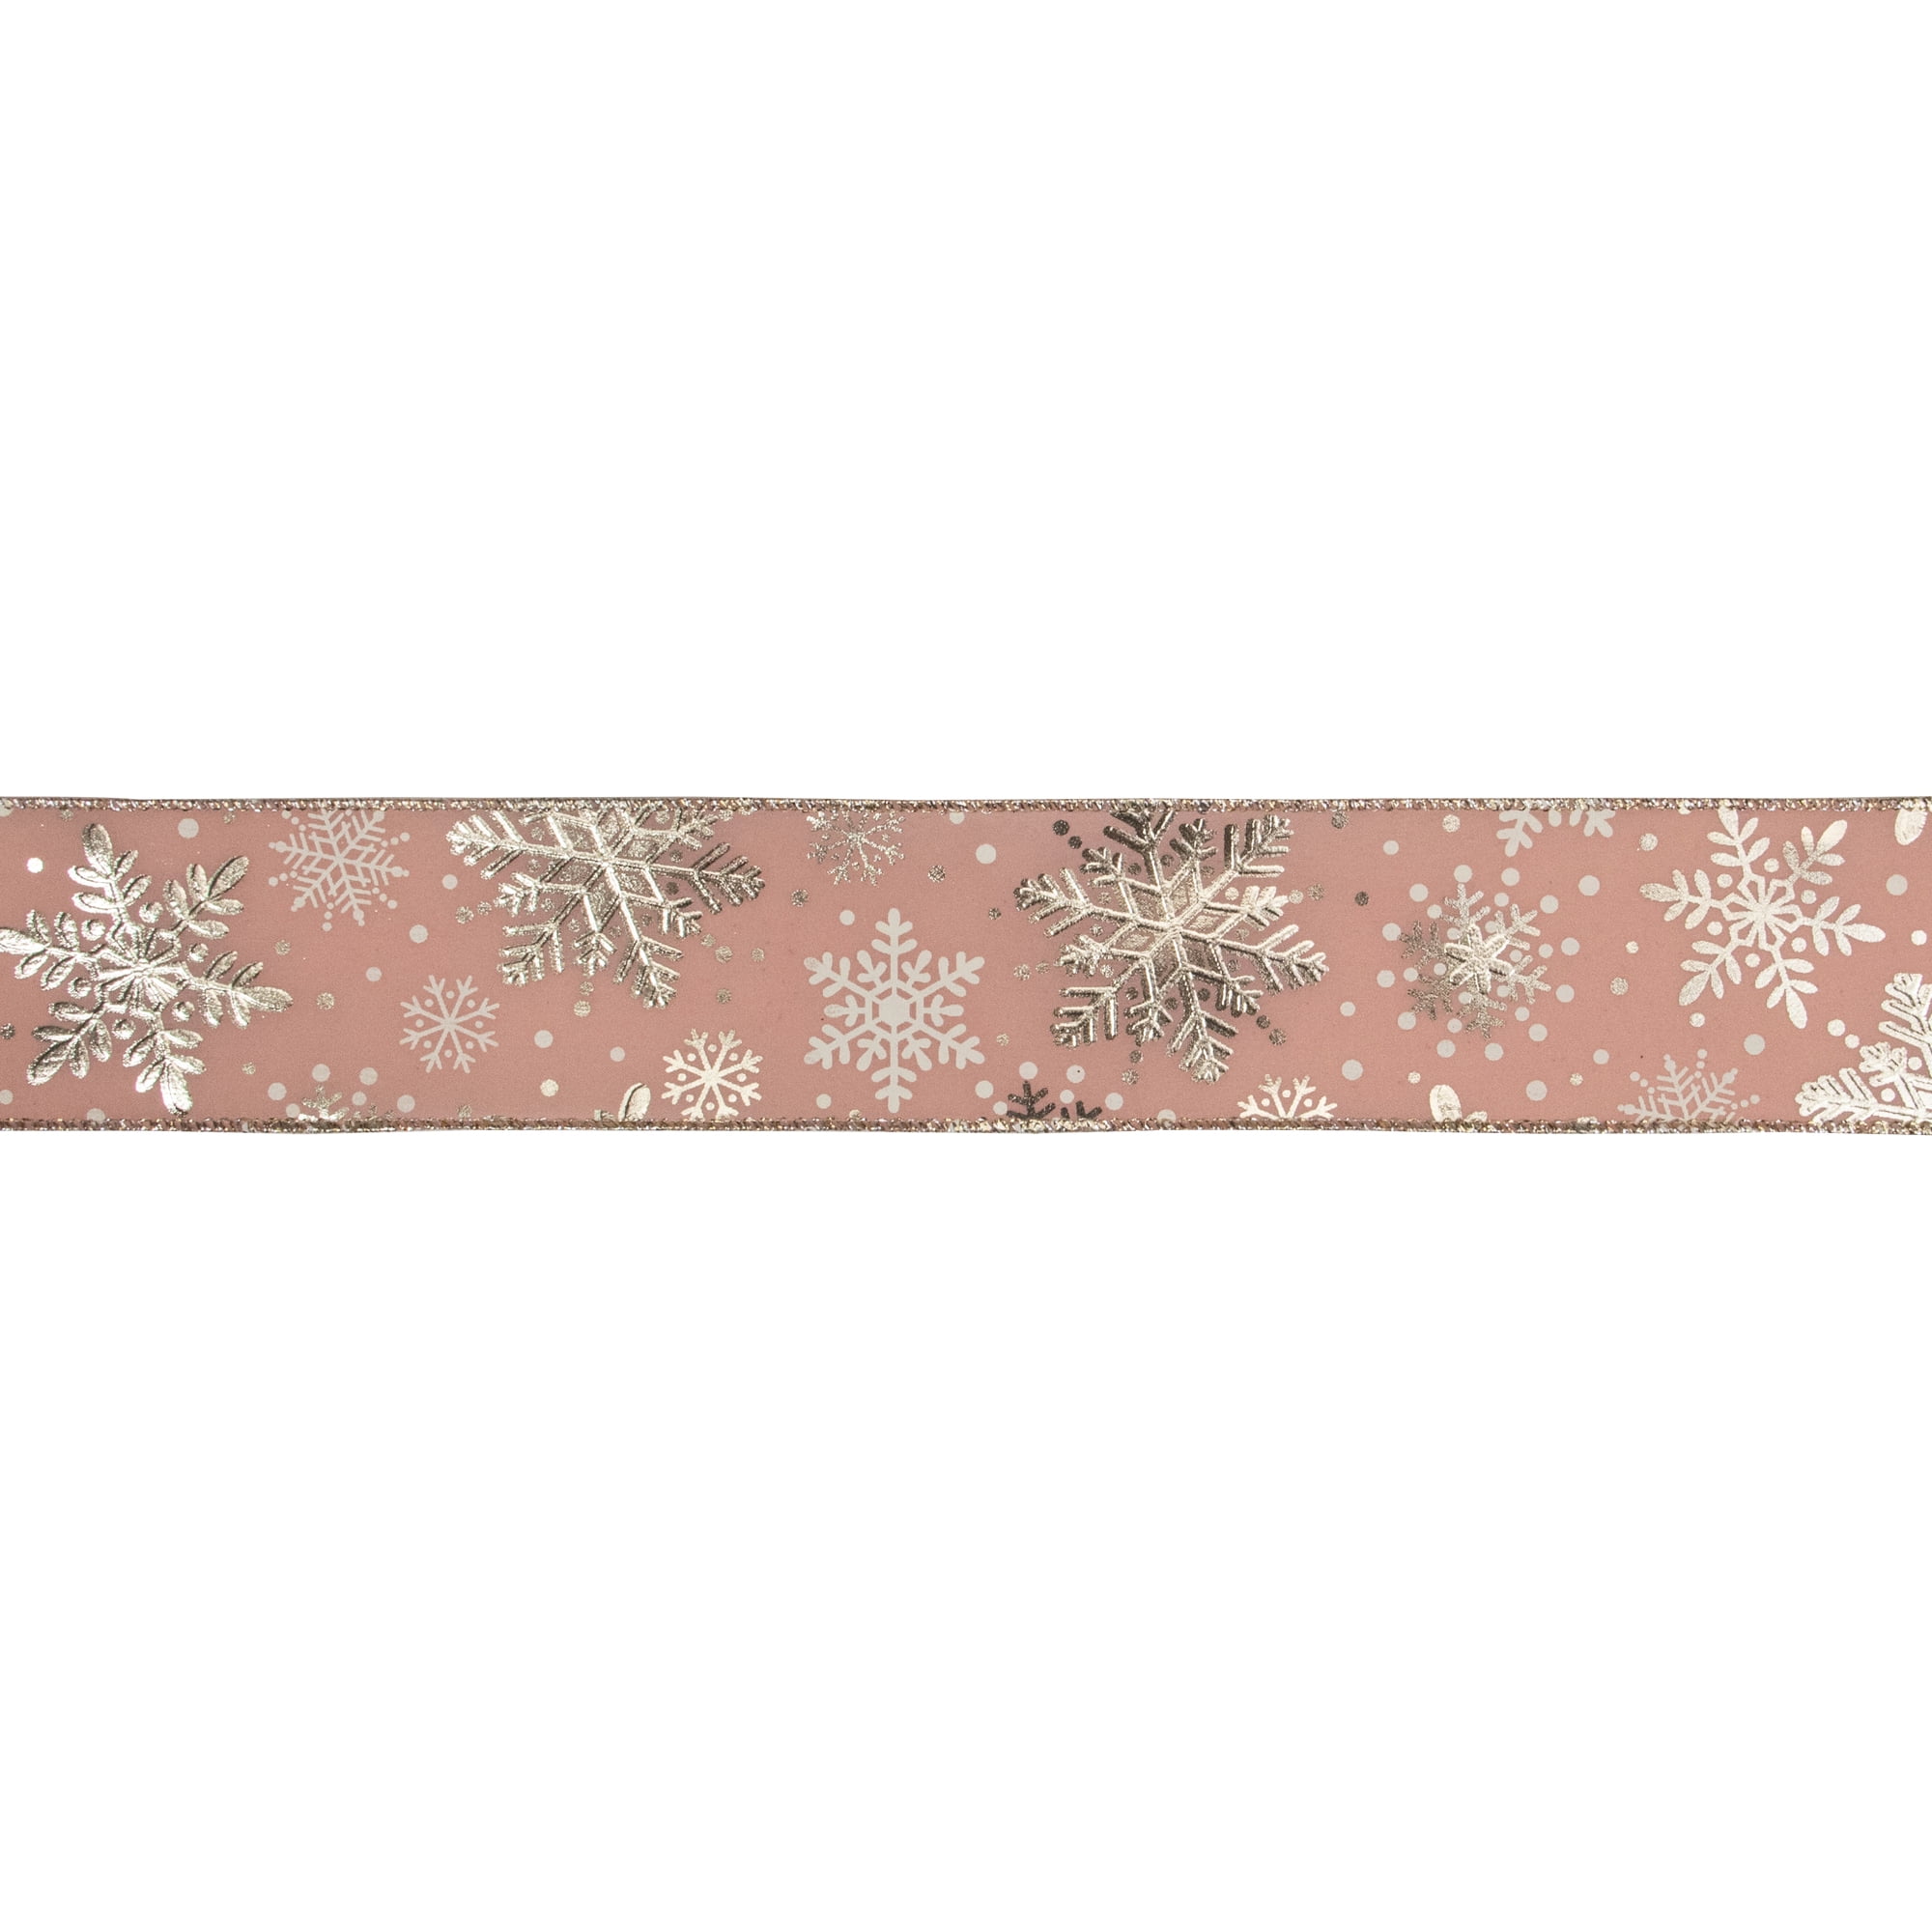 Christmas Winter Snowflakes on White 1" grosgrain ribbon 4 yds home decor craft 